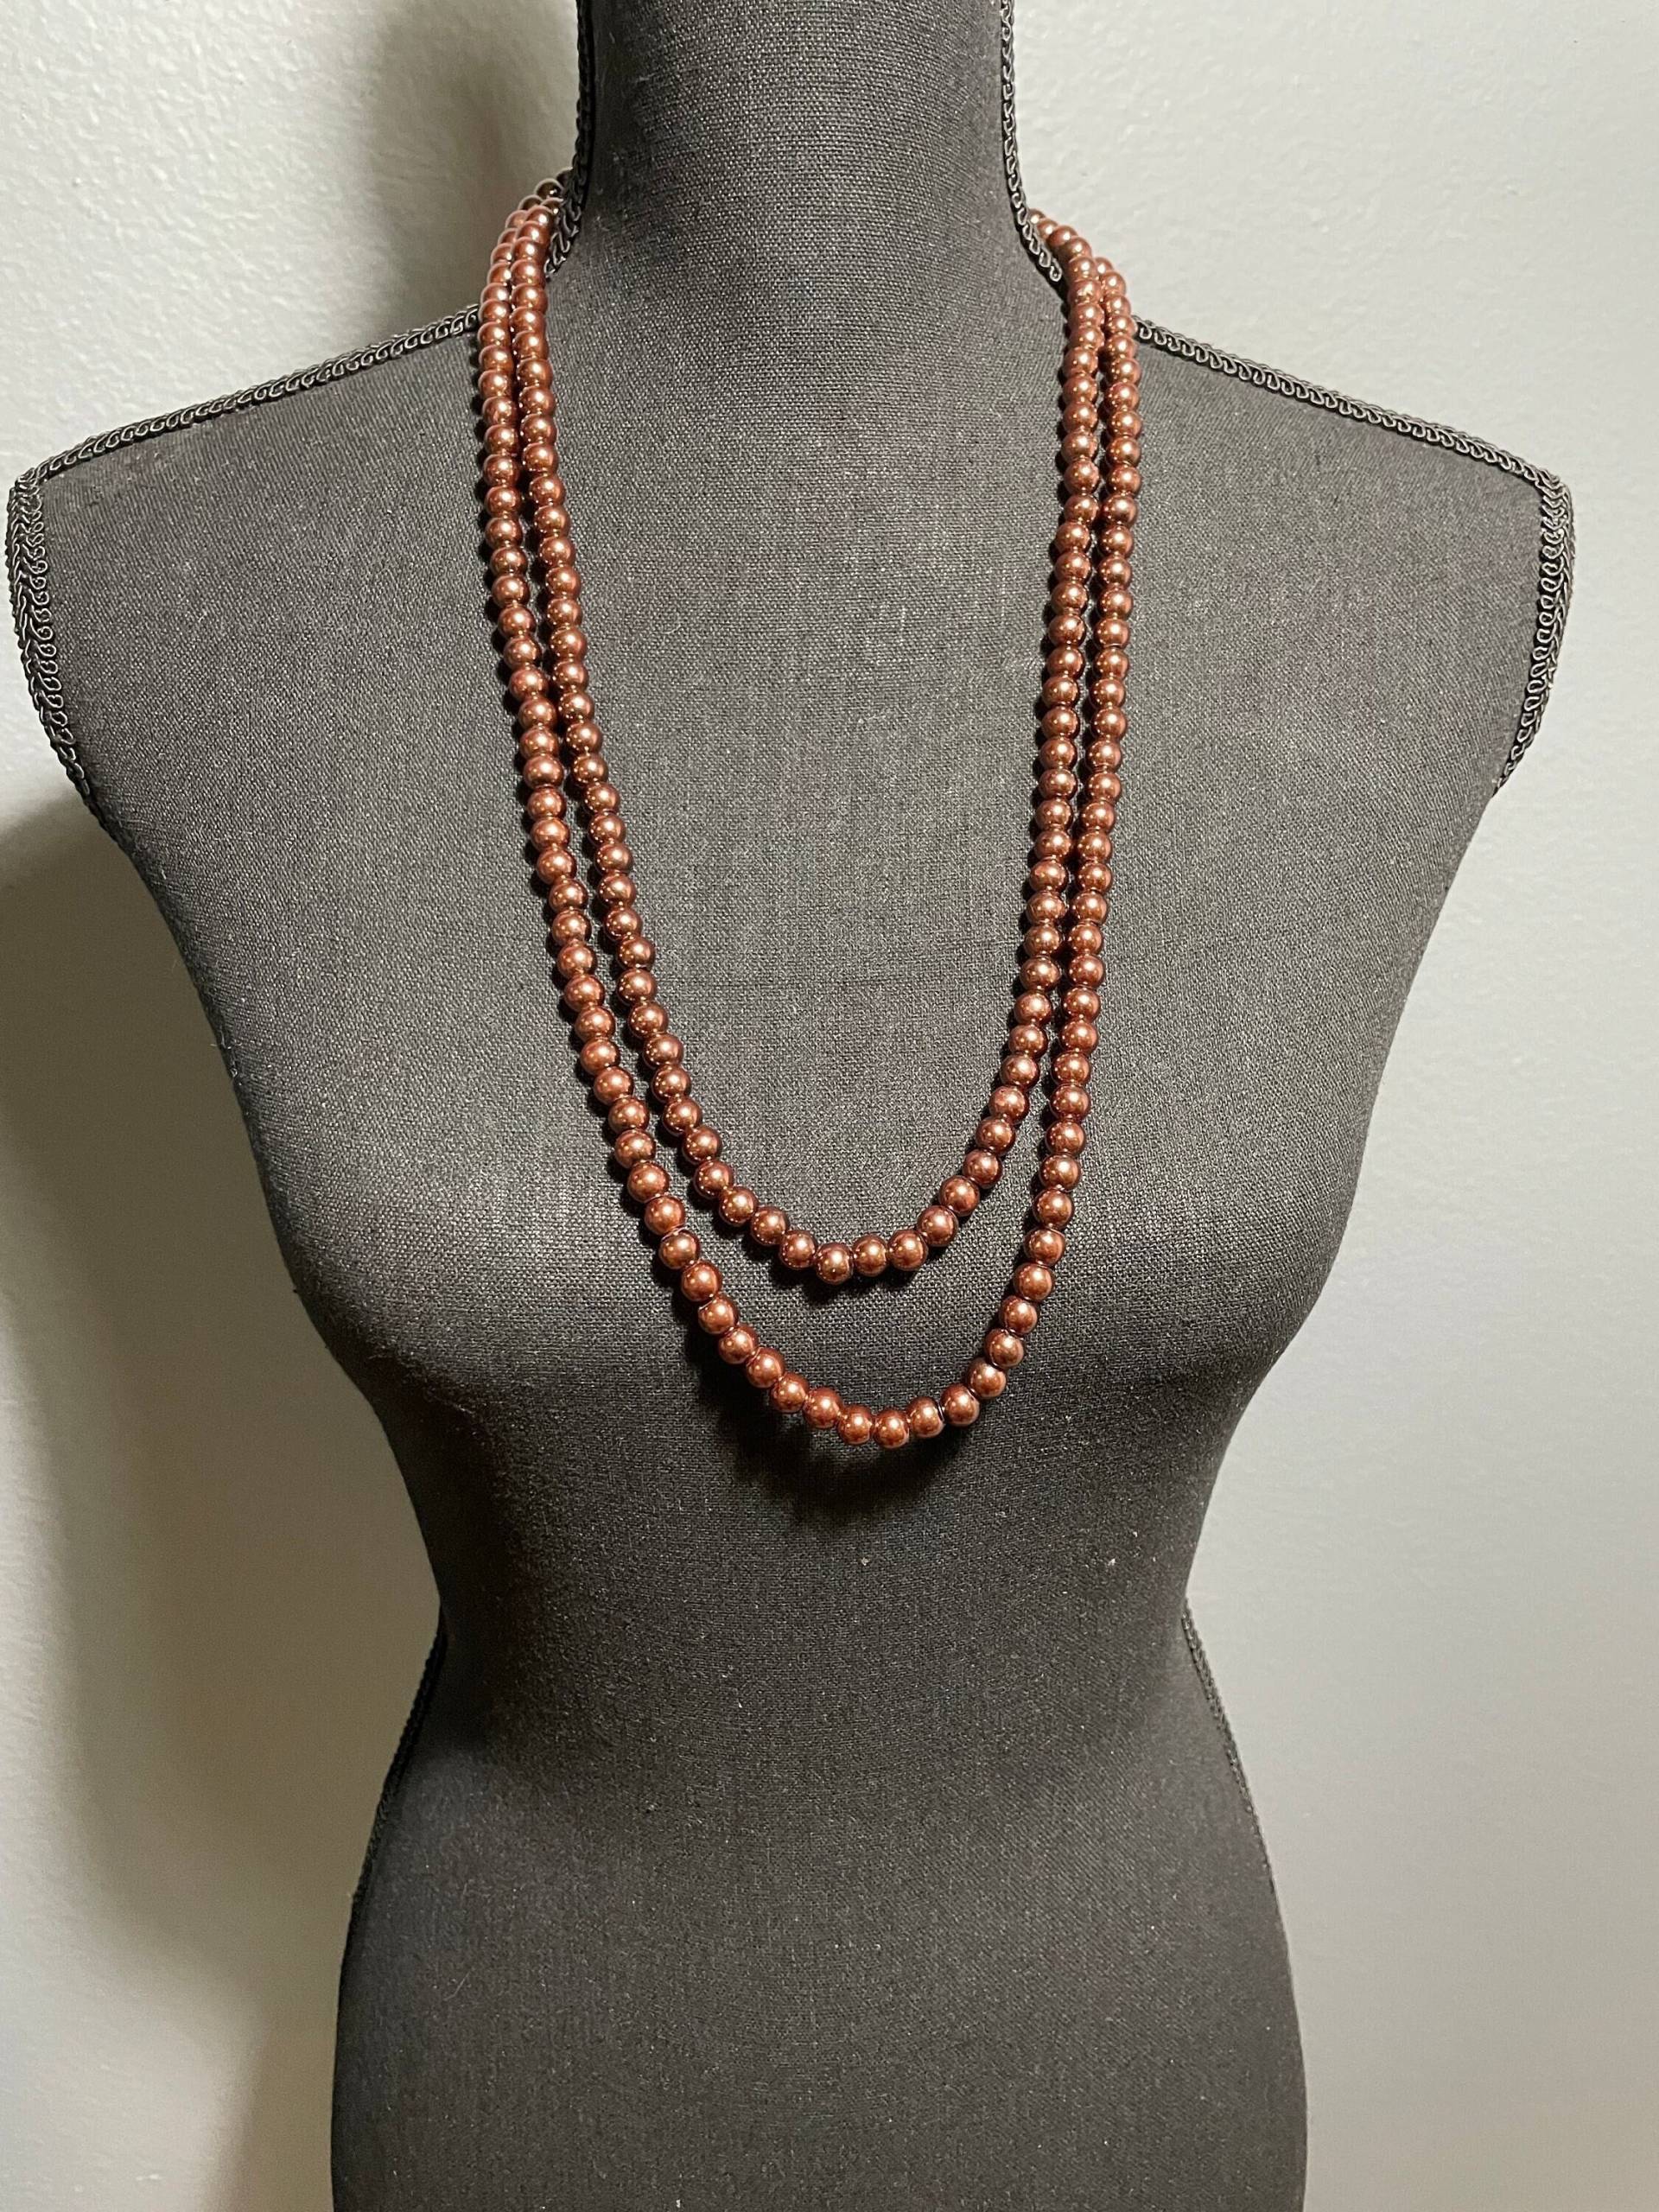 Vintage Braune Metallic Perlenkette 72cm Lang von VintageHarmoni